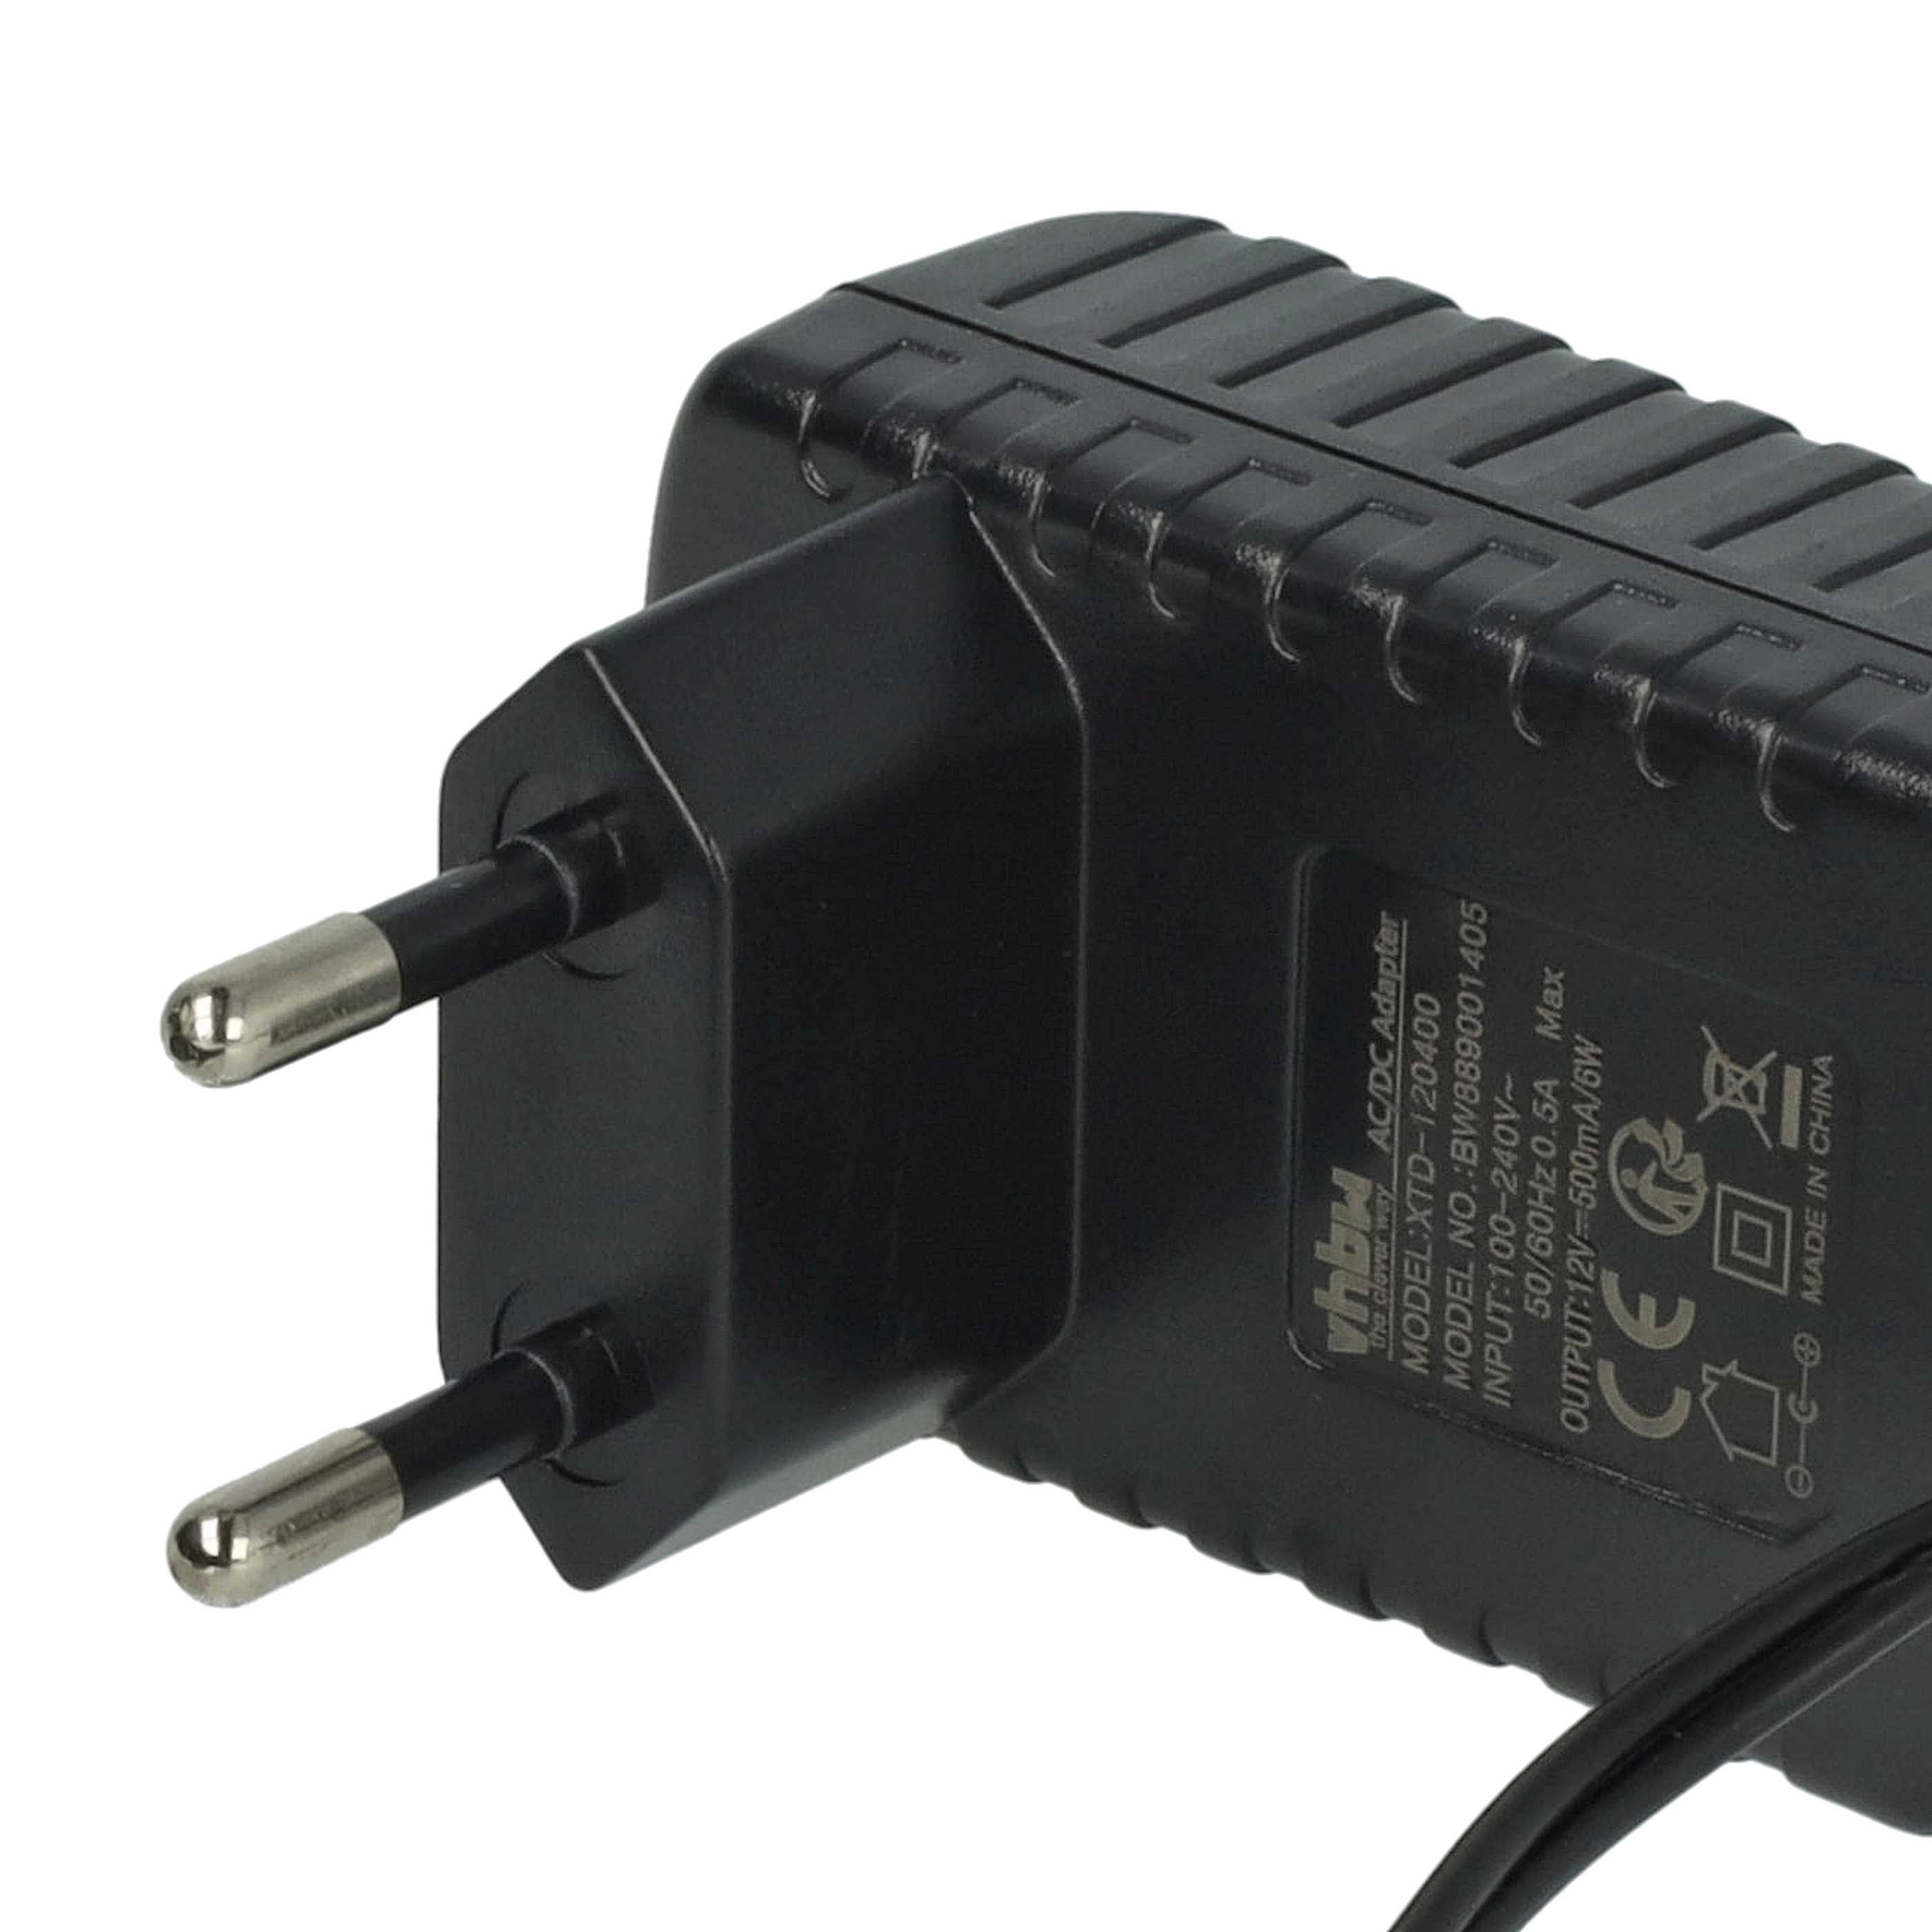 Mains Power Adapter replaces Sennheiser 508899, NT 12-5 CW+ for Sennheiser Radio